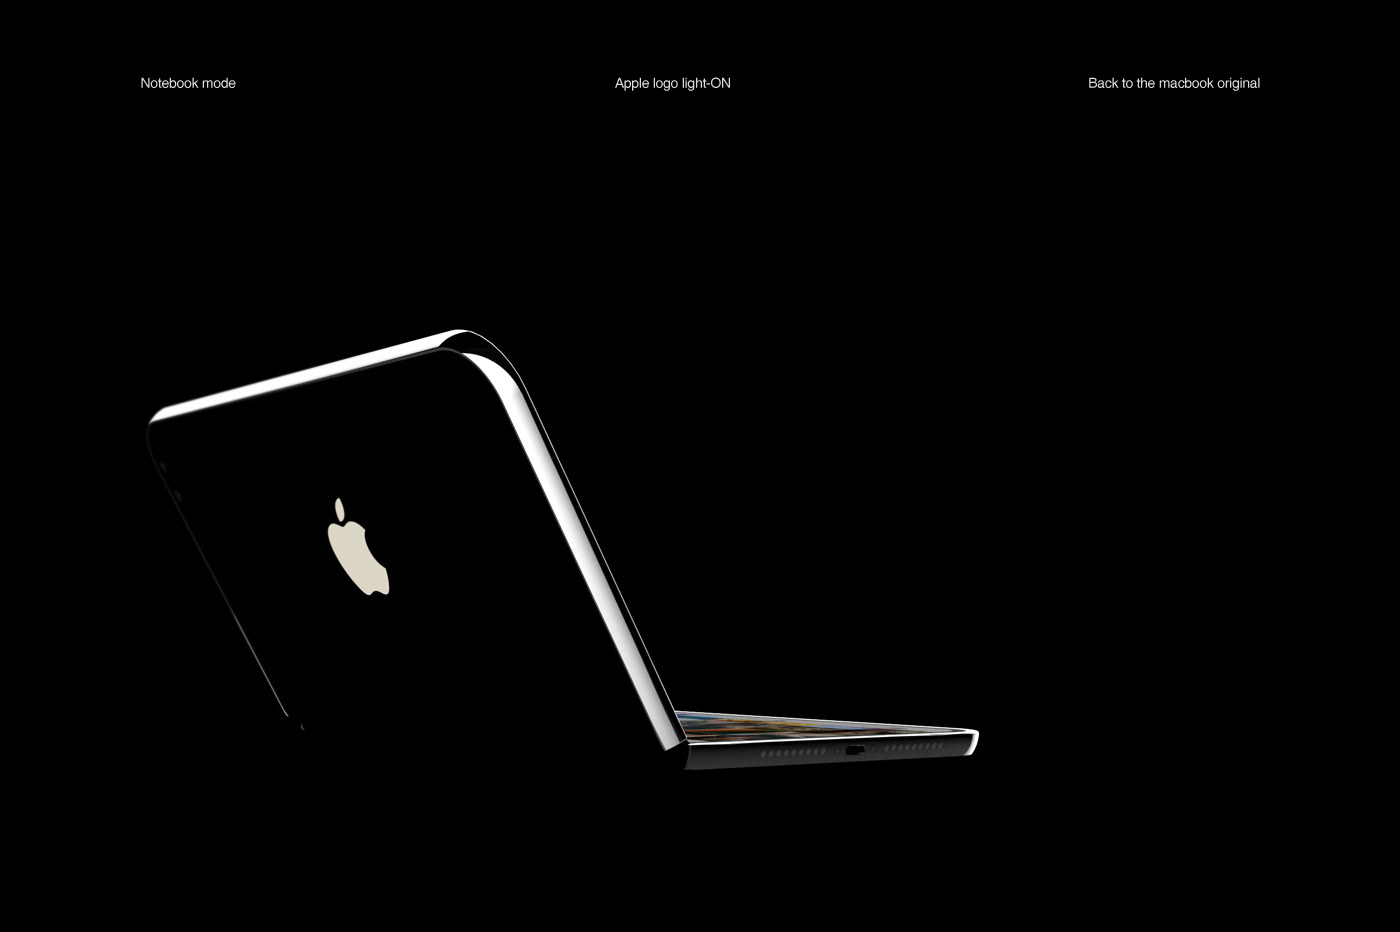 iphone fold iphone concept iphone iphone youtube repreid apple pencil iPad apple iphone fold concept